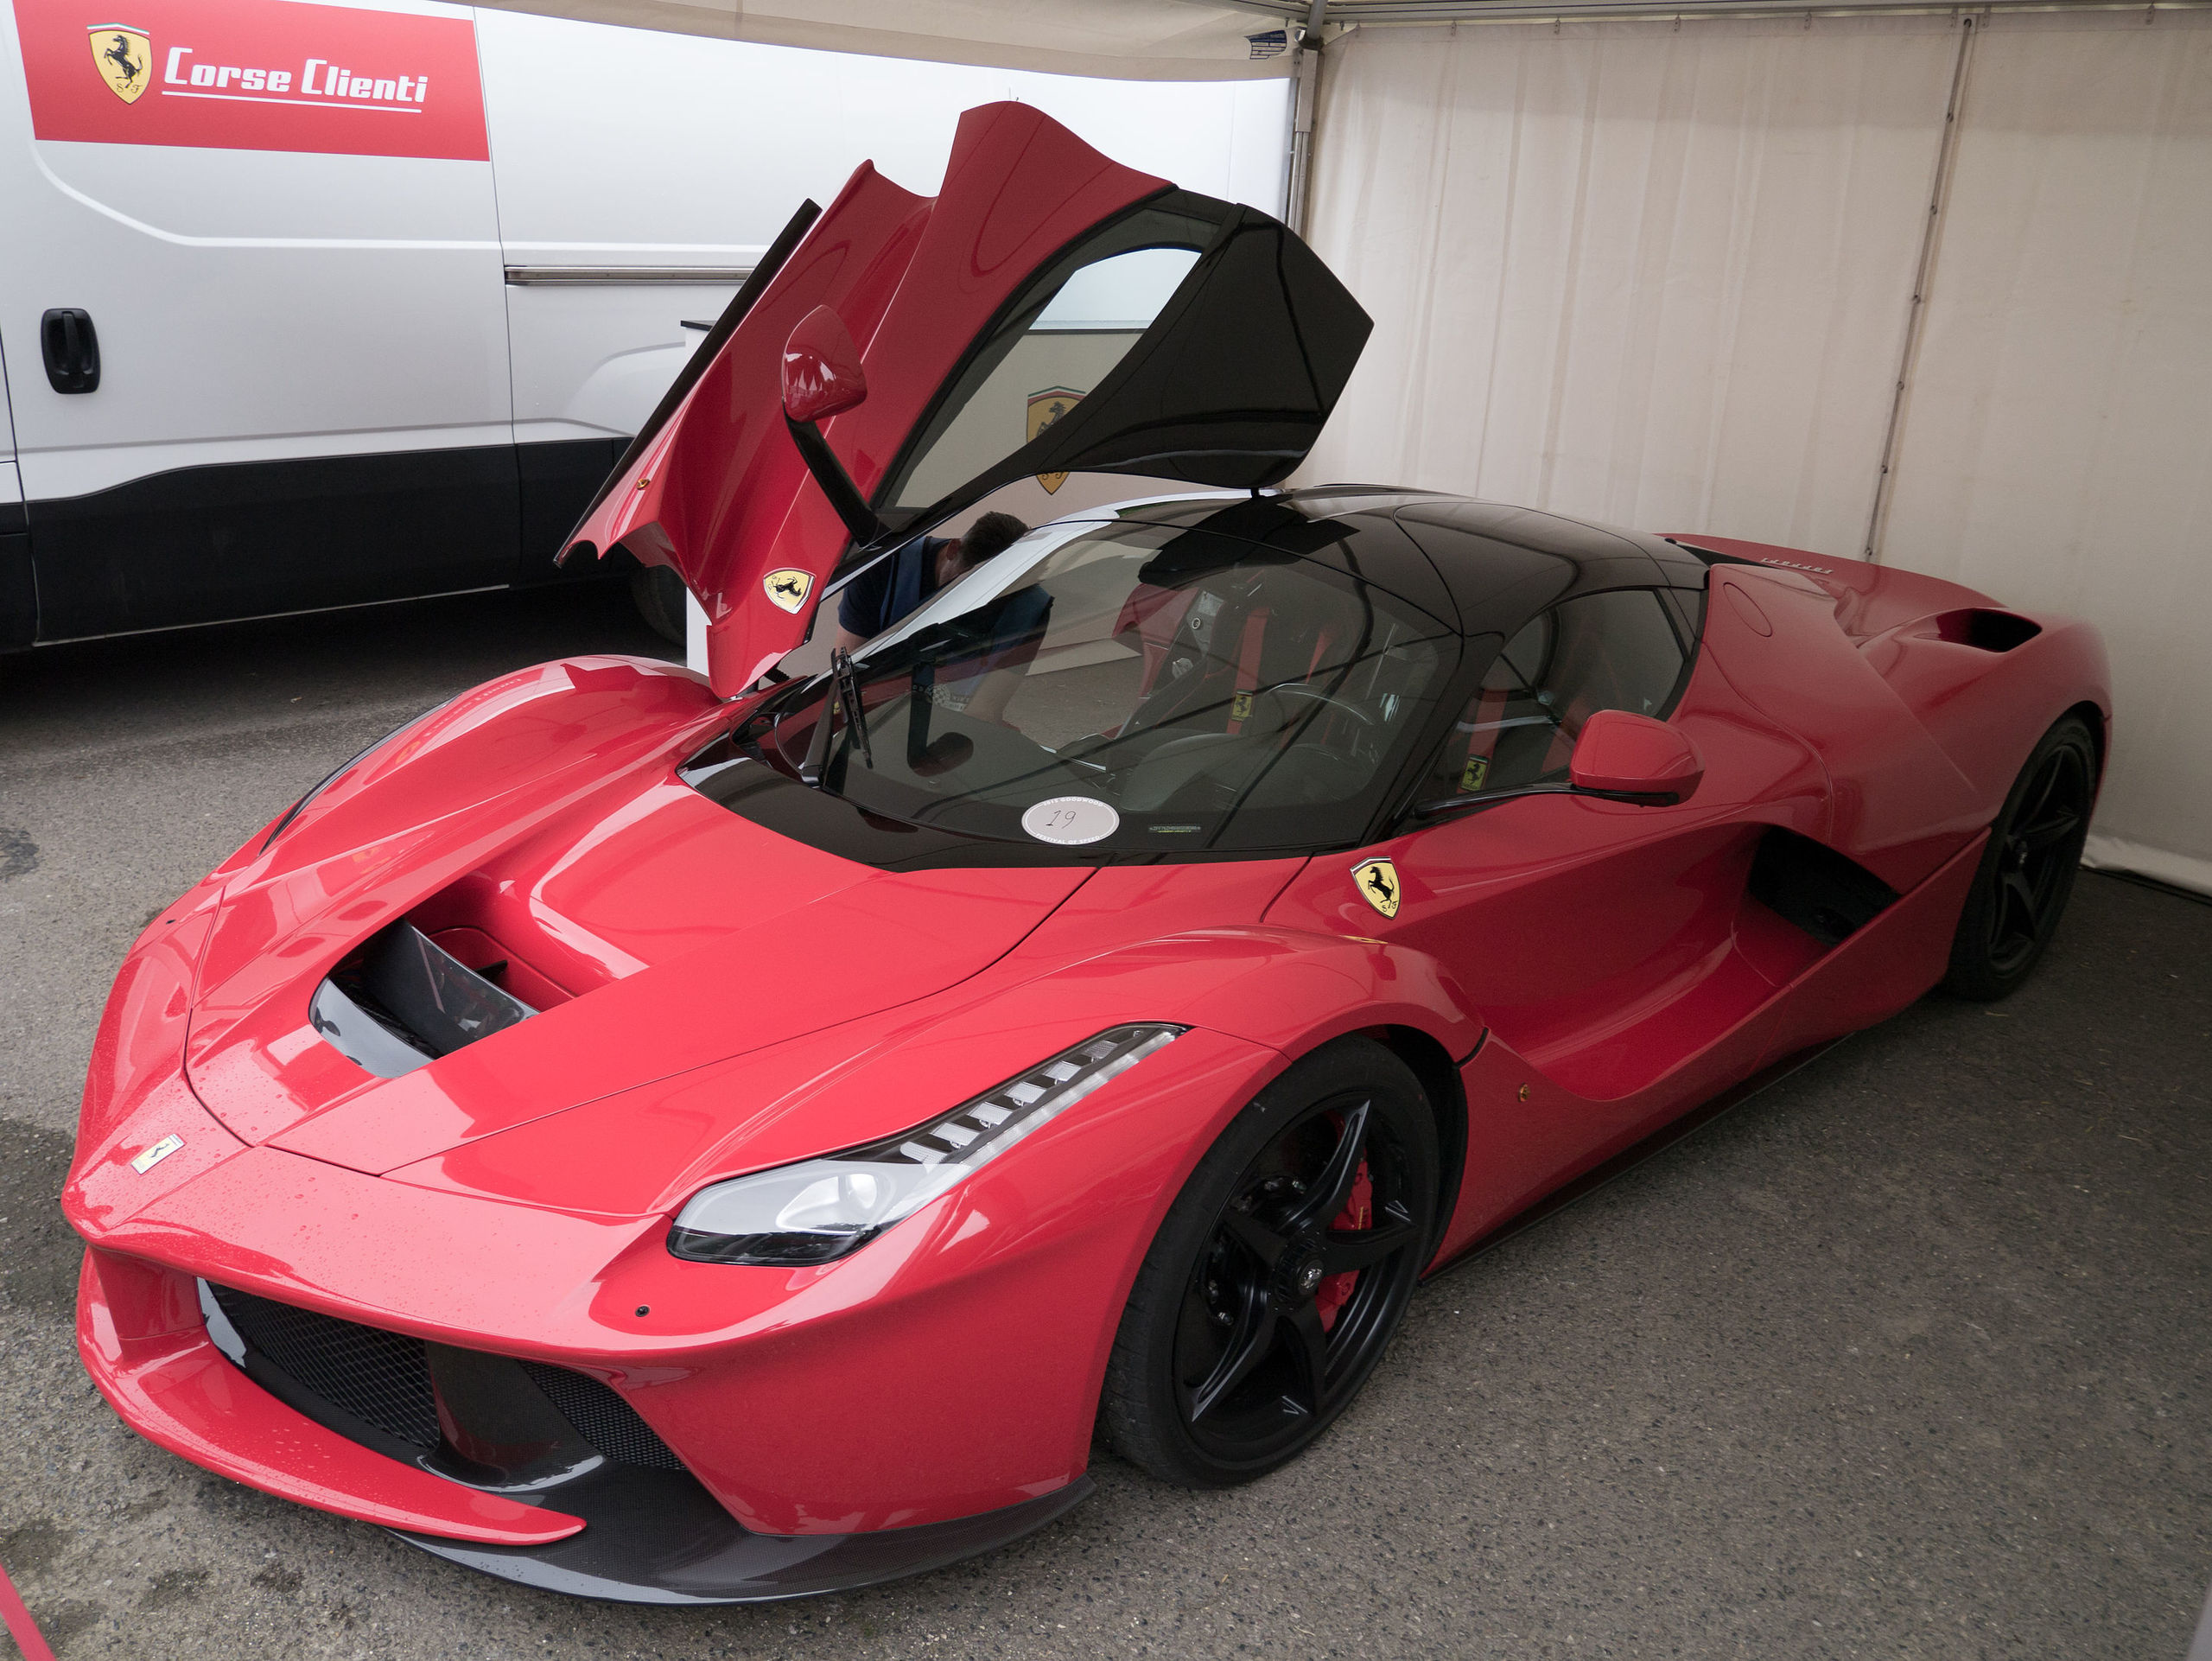 File:2014 Ferrari LaFerrari (20433282415).jpg - Wikimedia Commons